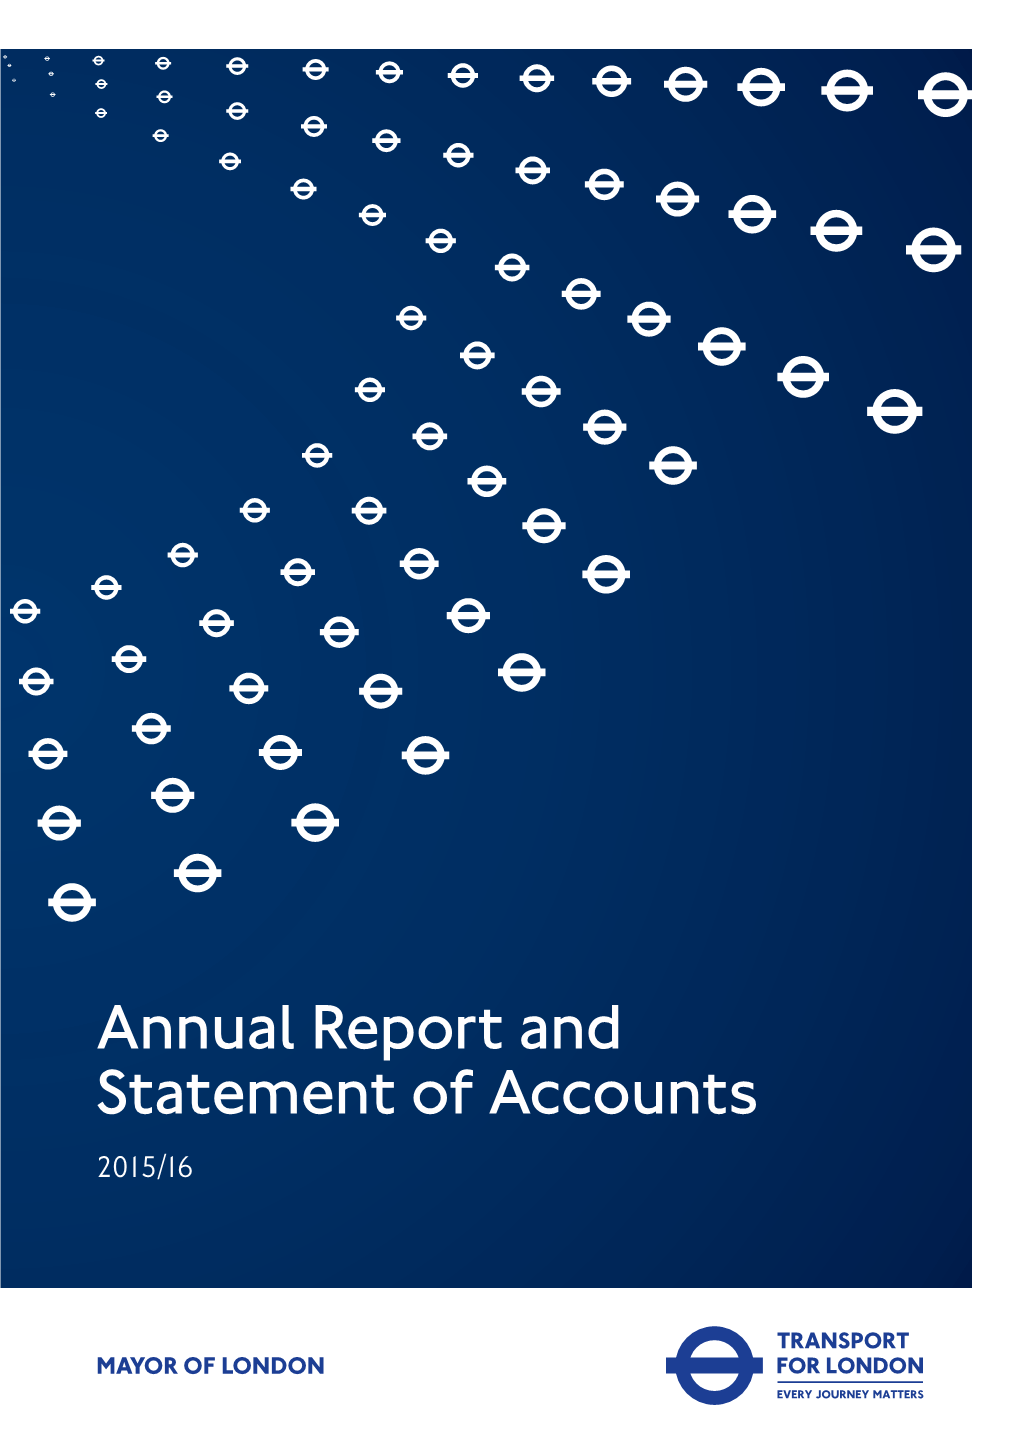 Tfl Annual Report 2015/16